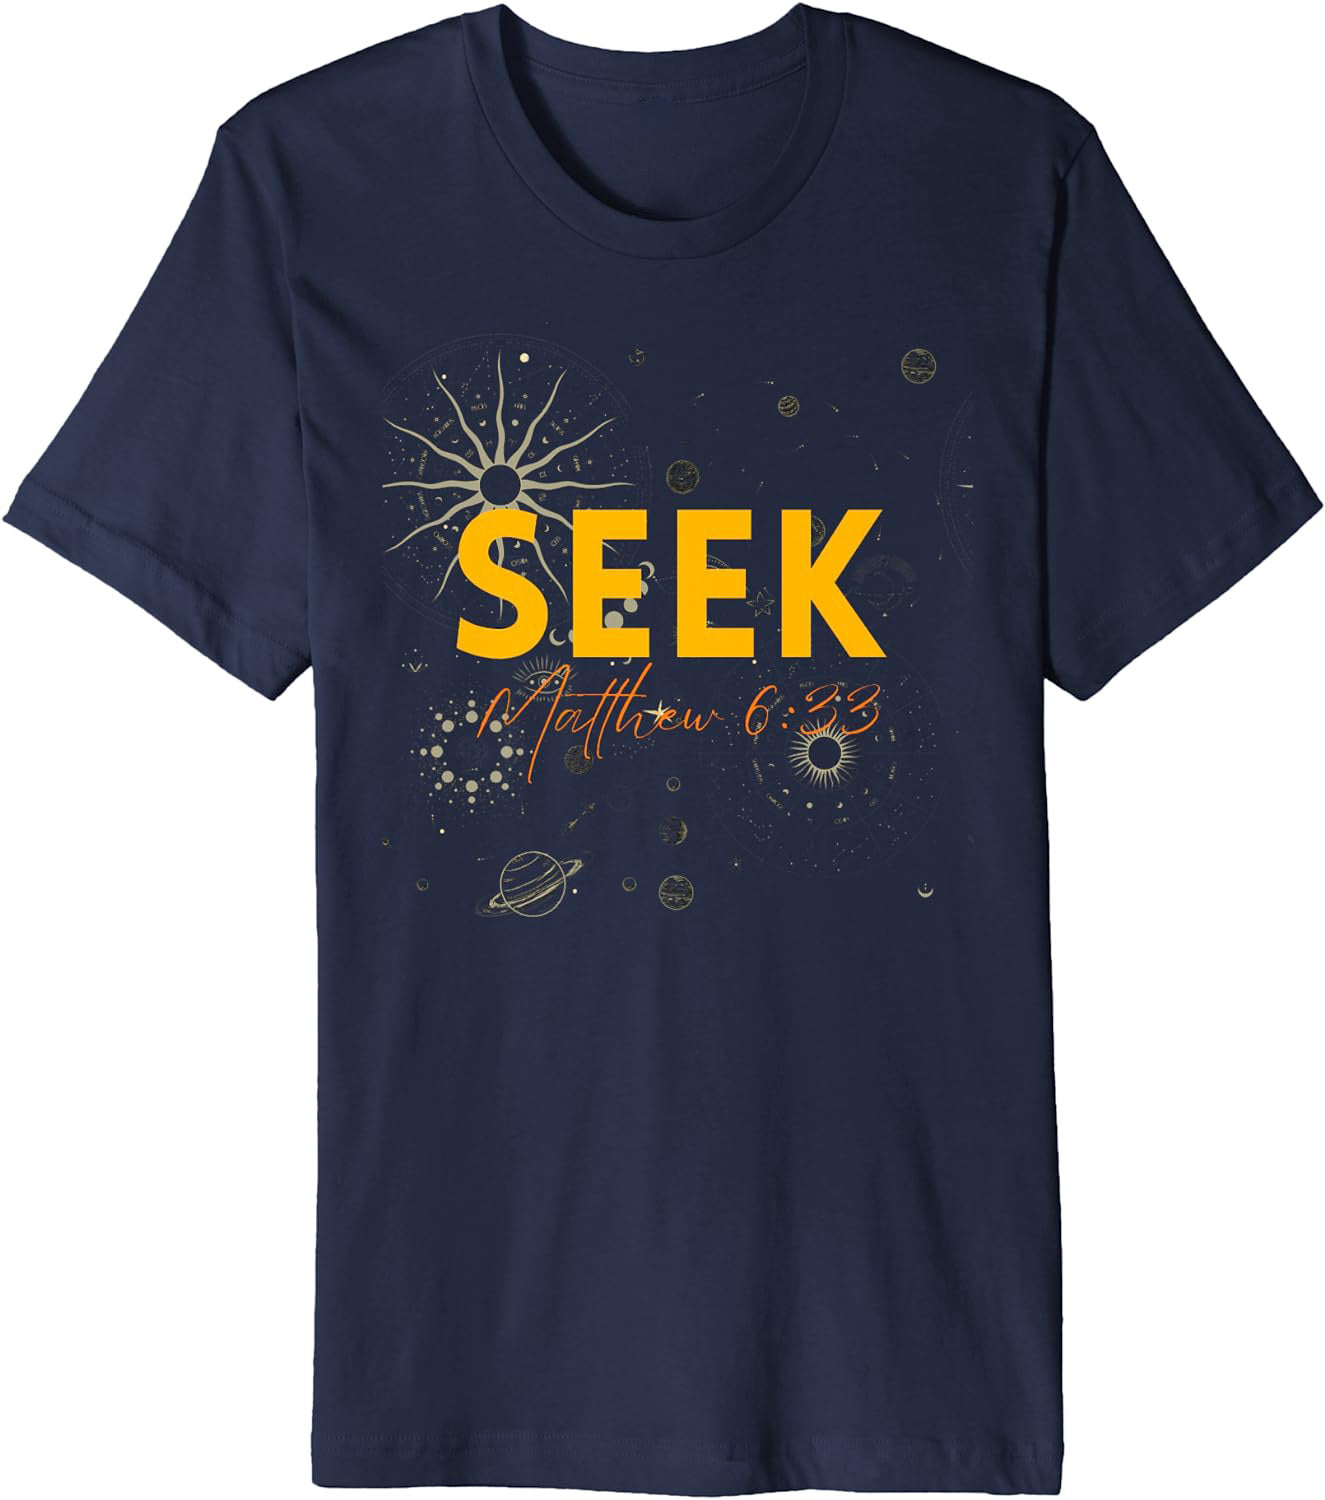 Seek - Premium T-Shirt - Fun and Inspirational Design by Crucial Key